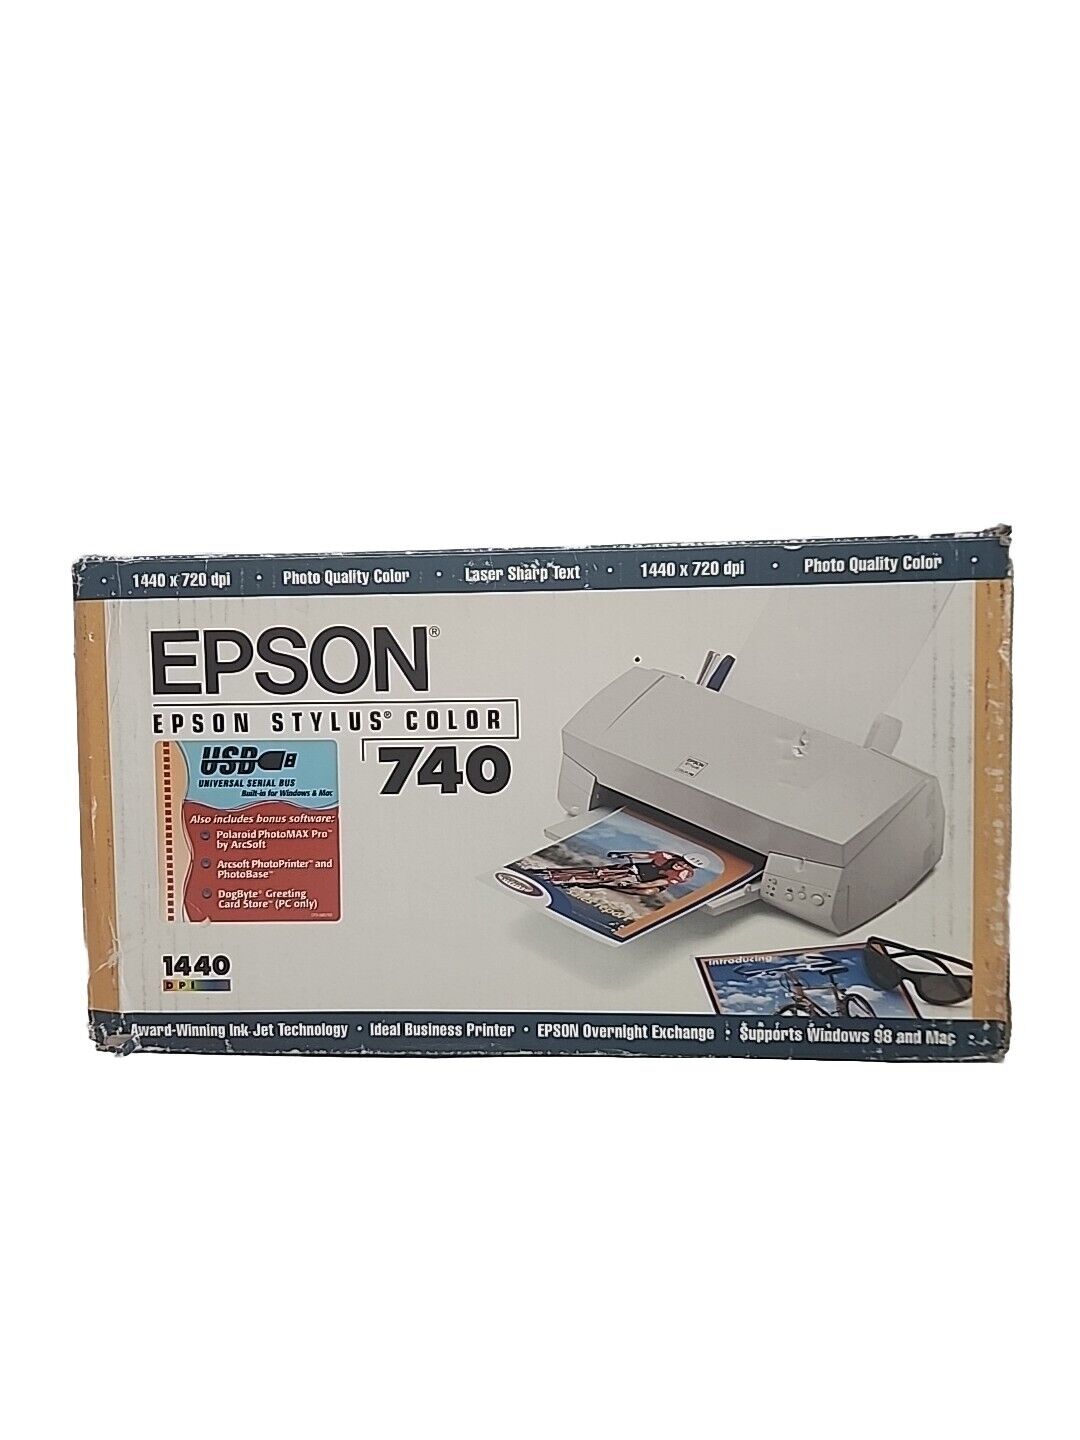 Epson Stylus Color 740 Ink Jet Printer New Open Box